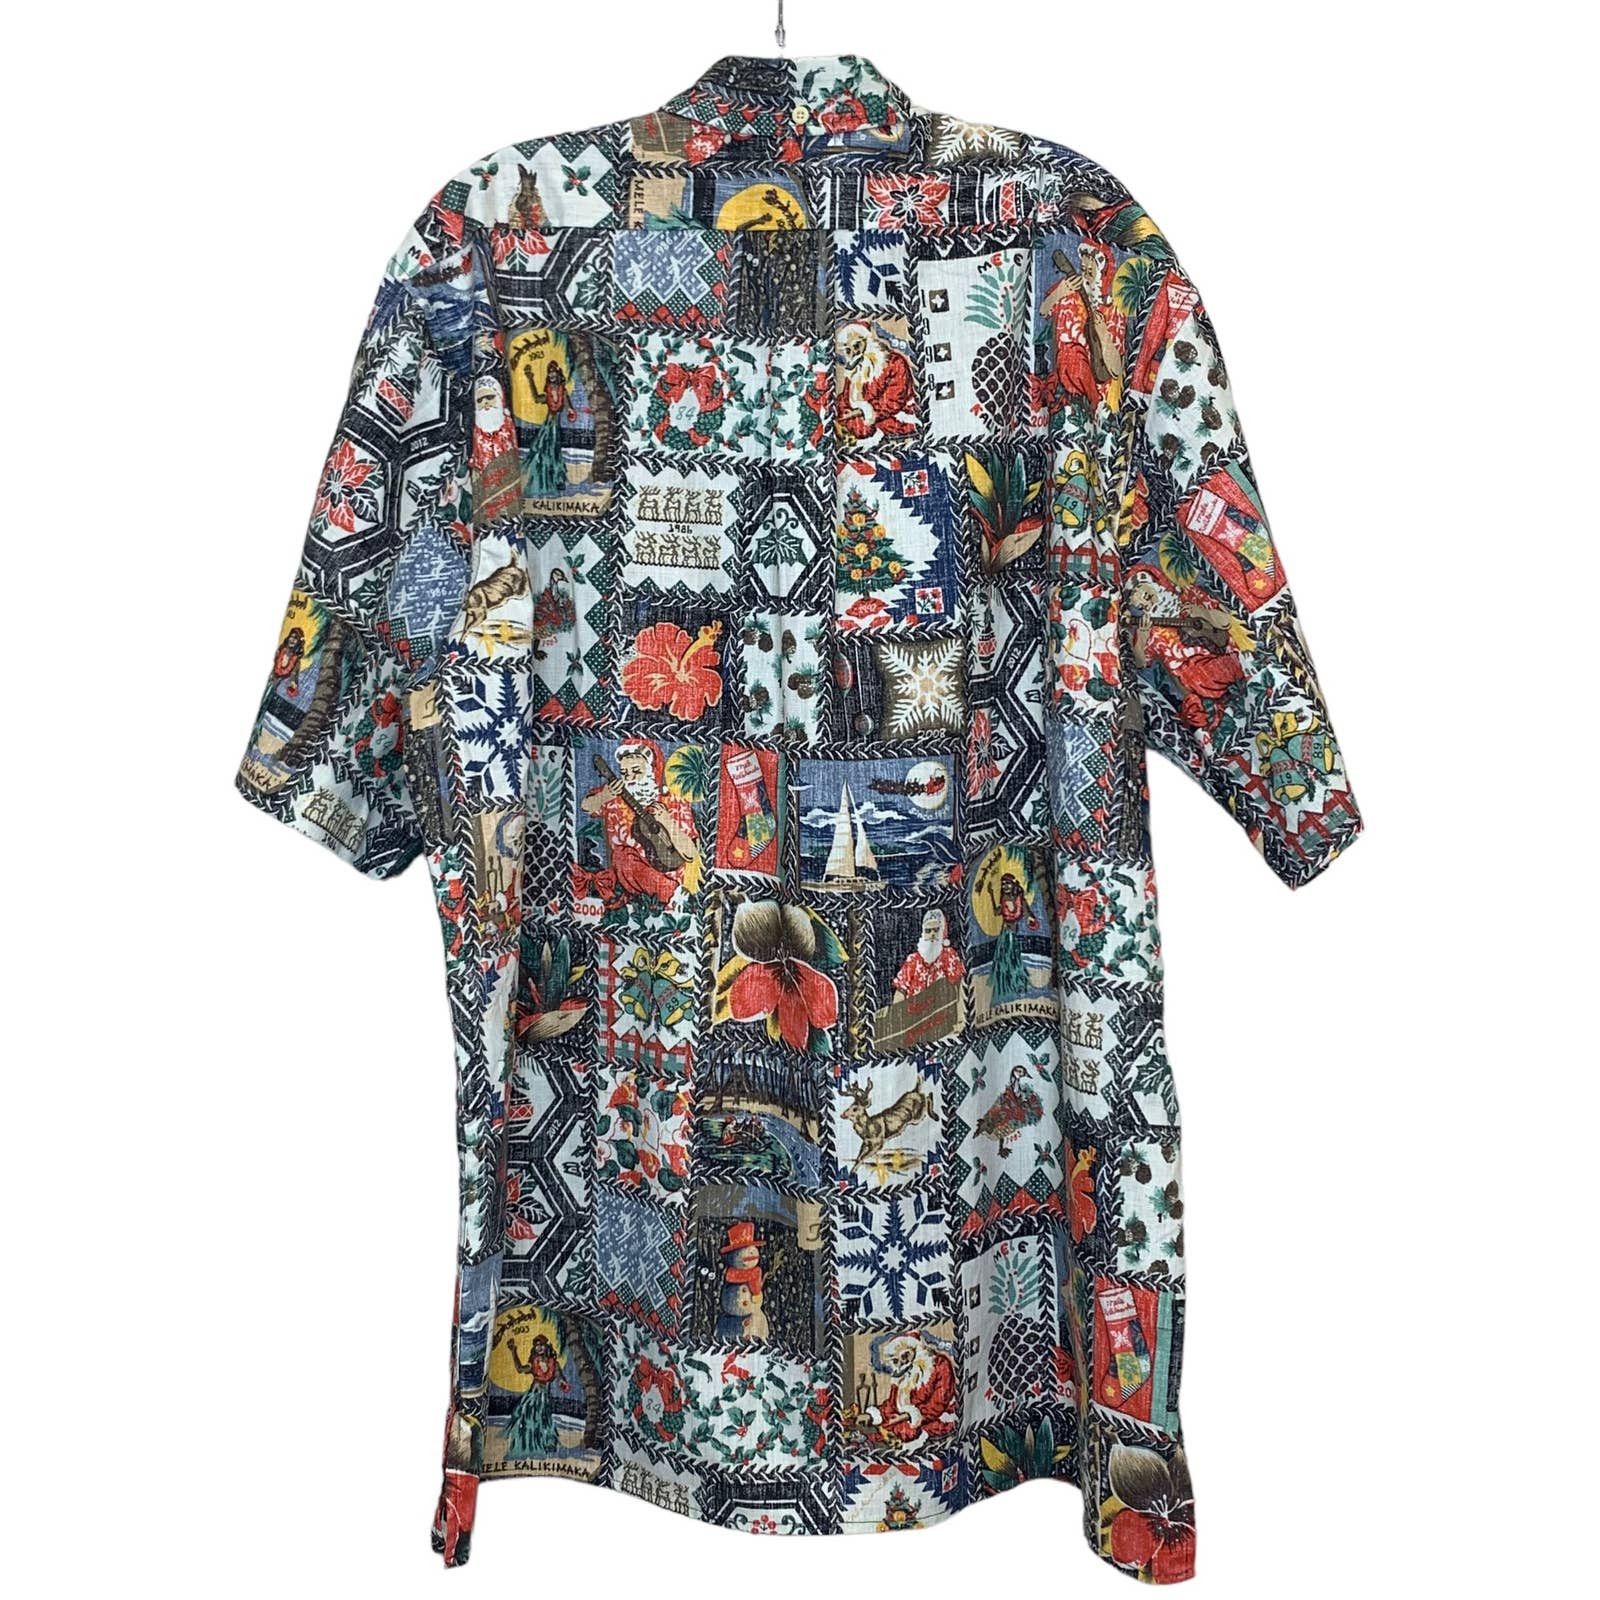 Reyn Spooner Reyn Spooner Mele Kalikimaka Hawaiian Shirt Christmas SZ XXL Size US XXL / EU 58 / 5 - 7 Preview